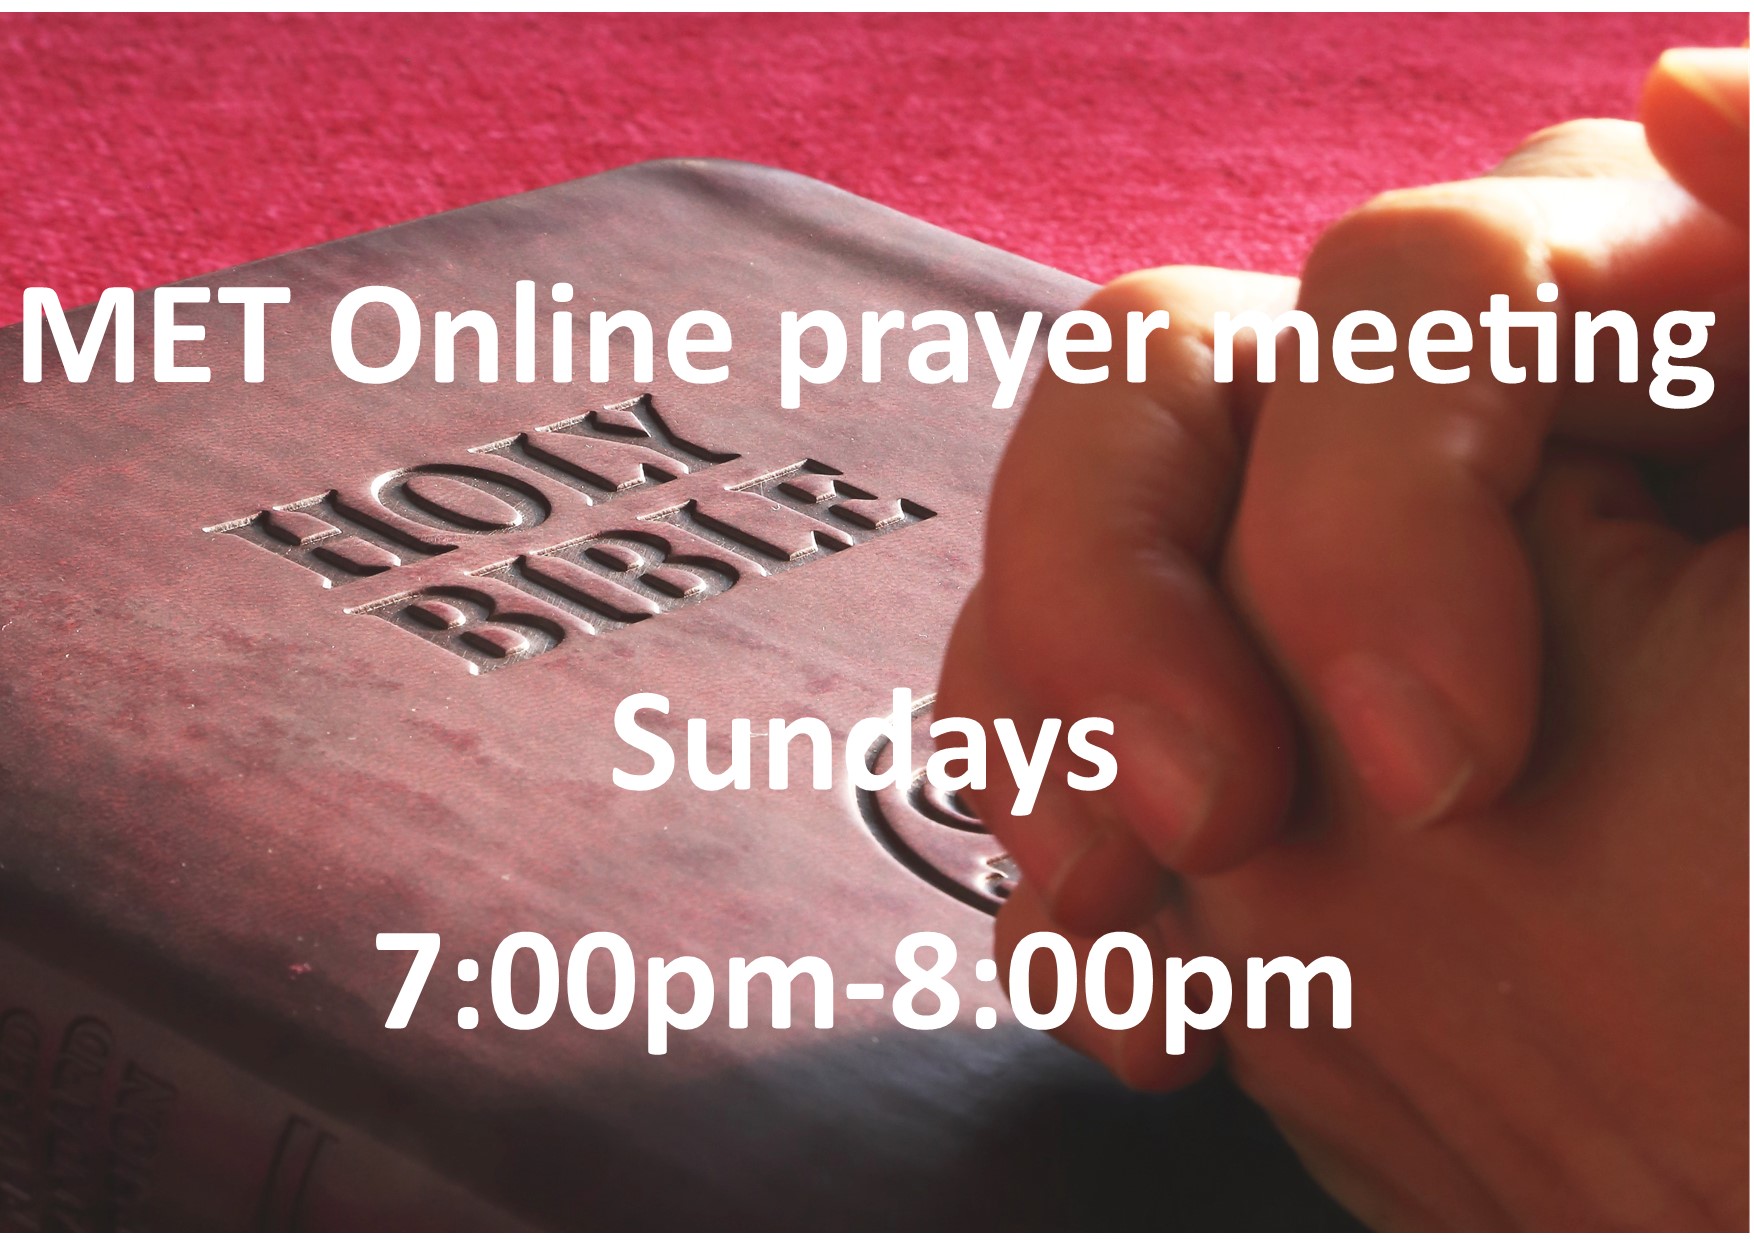 MET onlin prayer meeting small